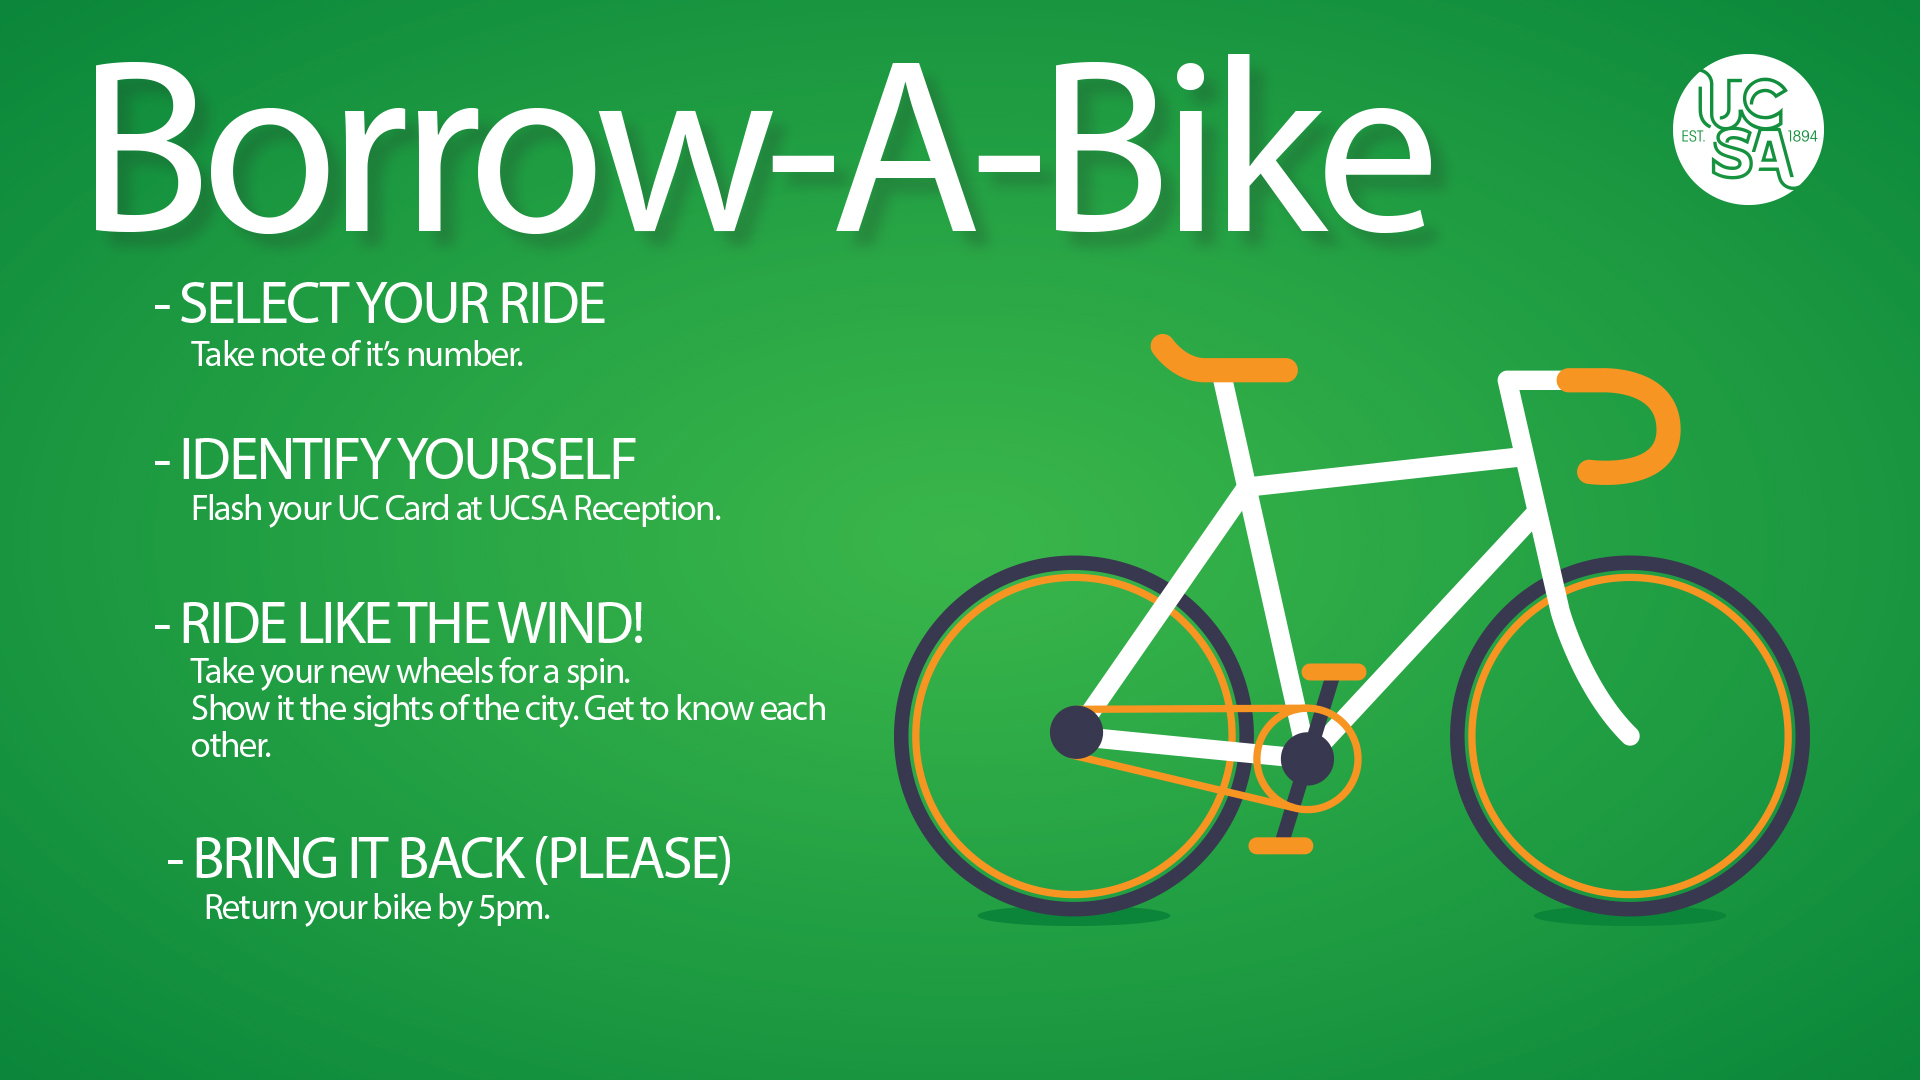 Borrow-a-bike